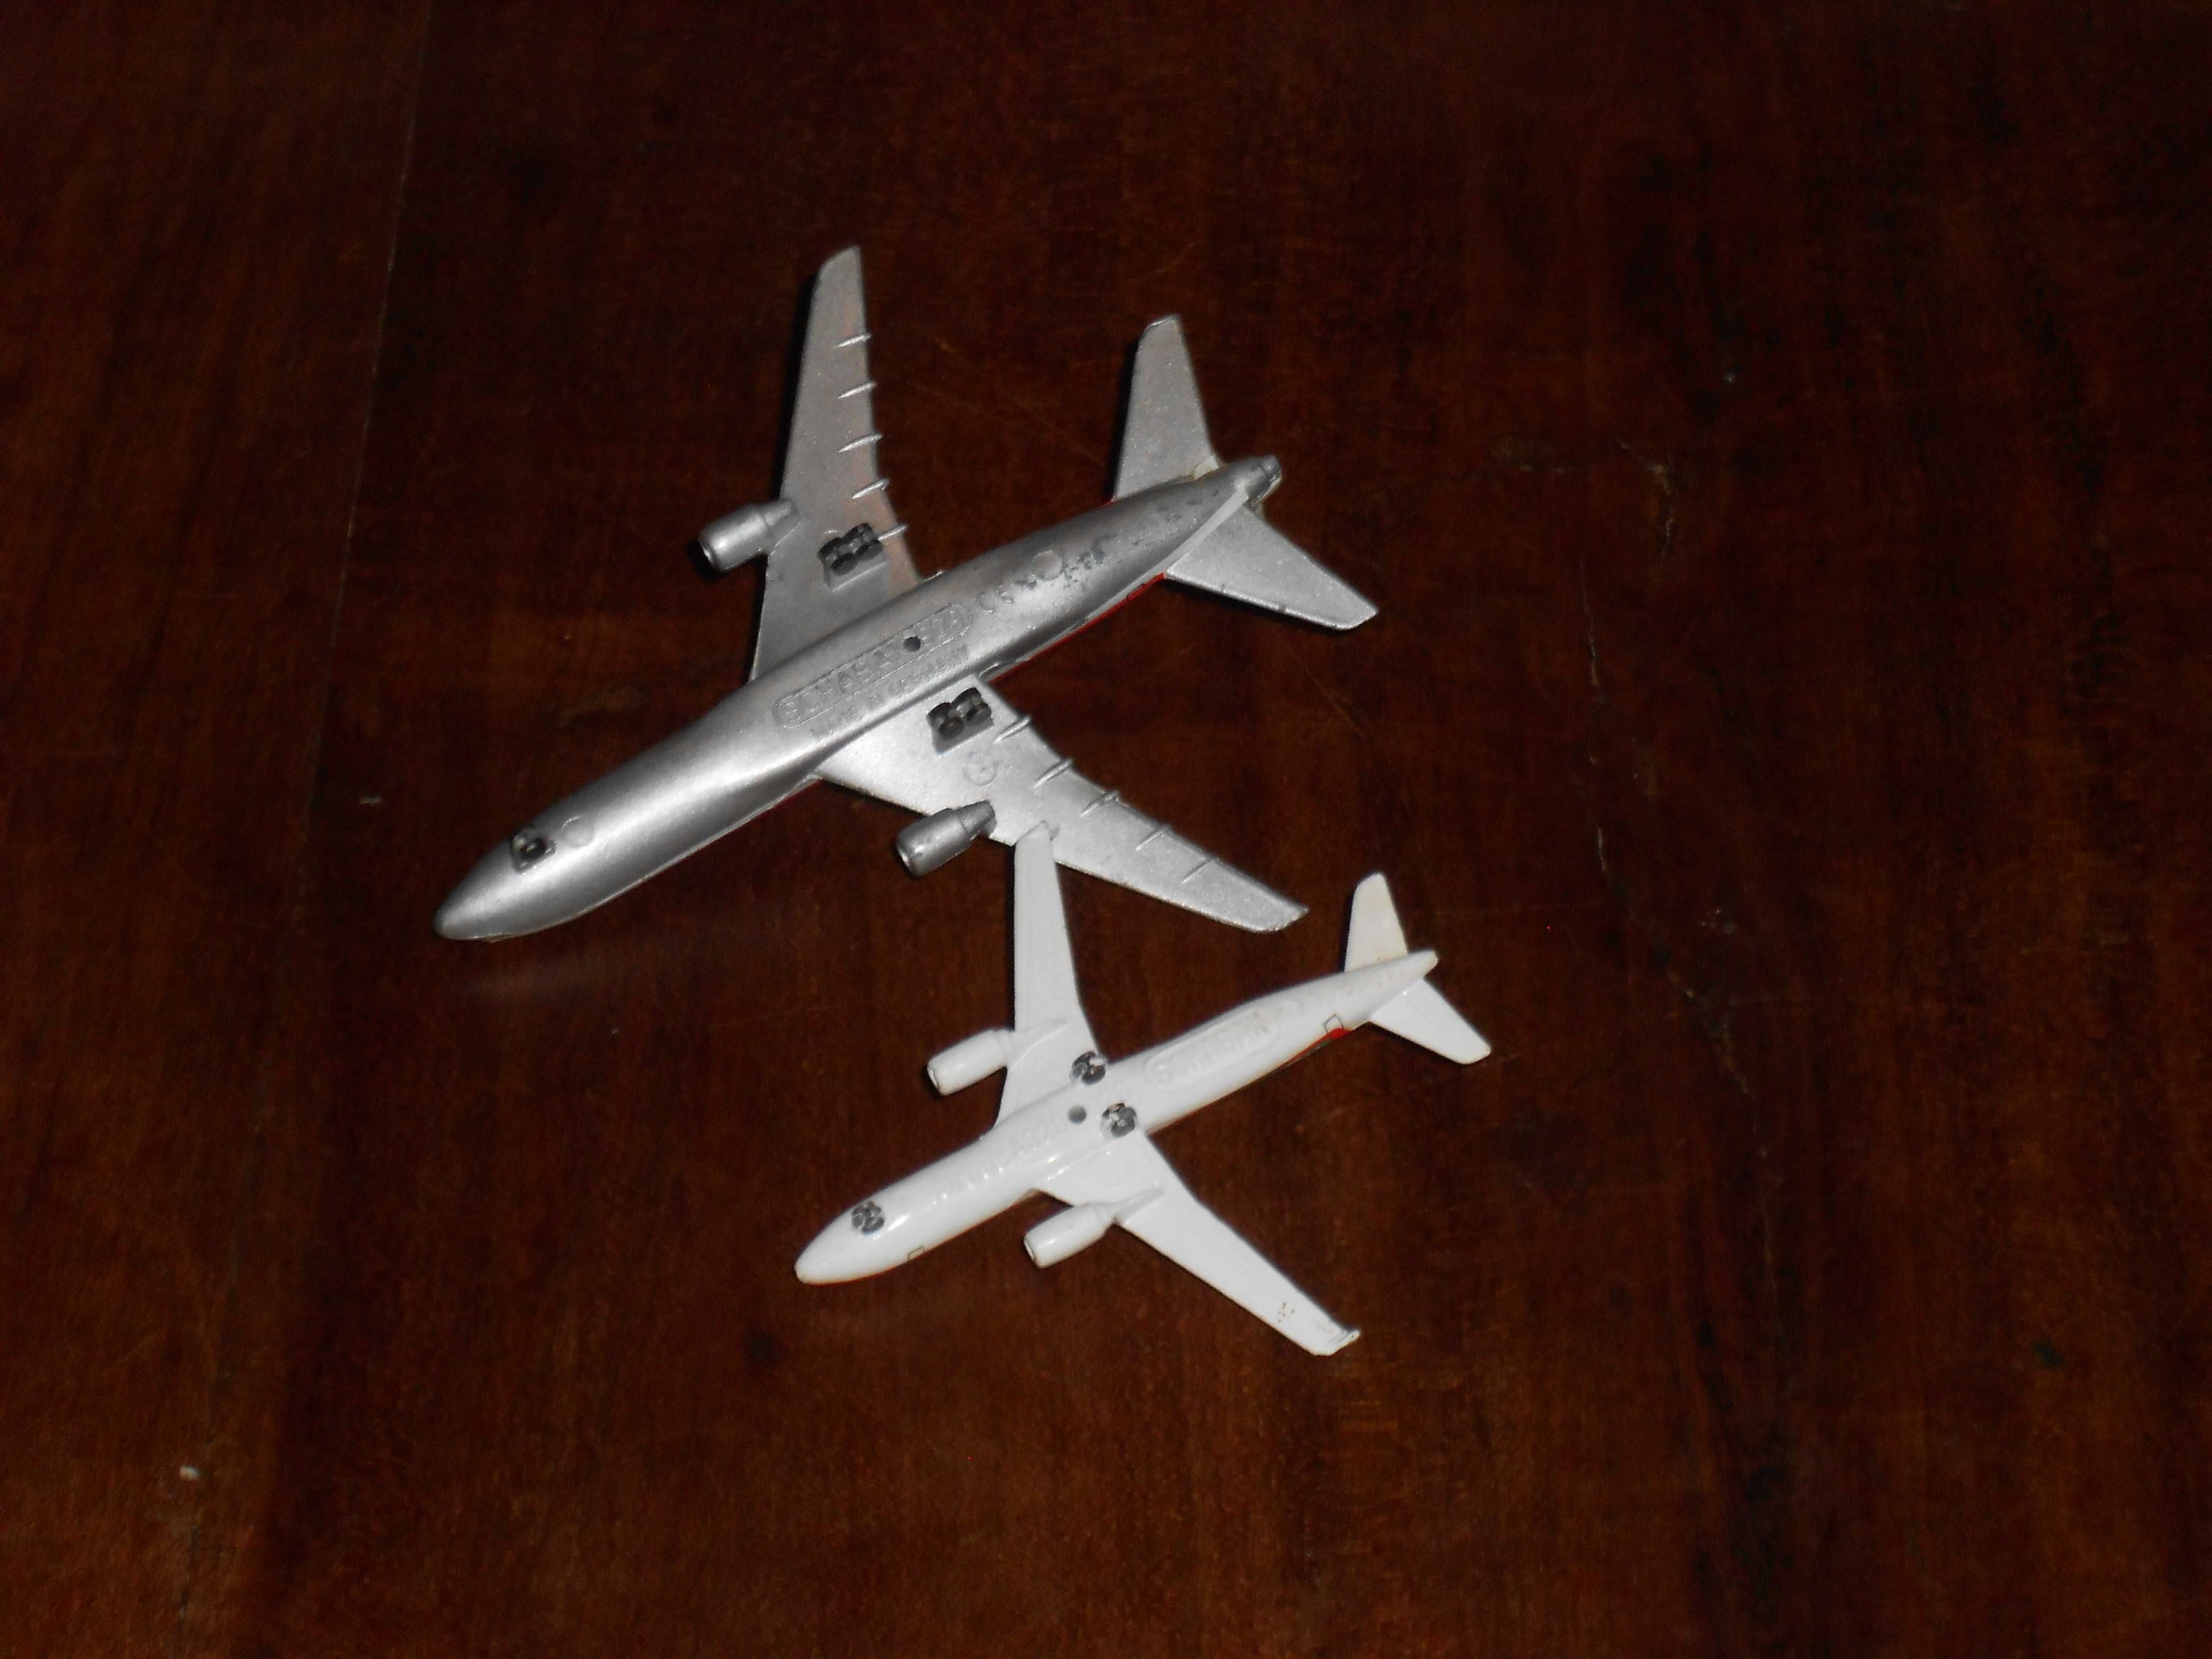 Modelos pequenos avioes TAP em metal